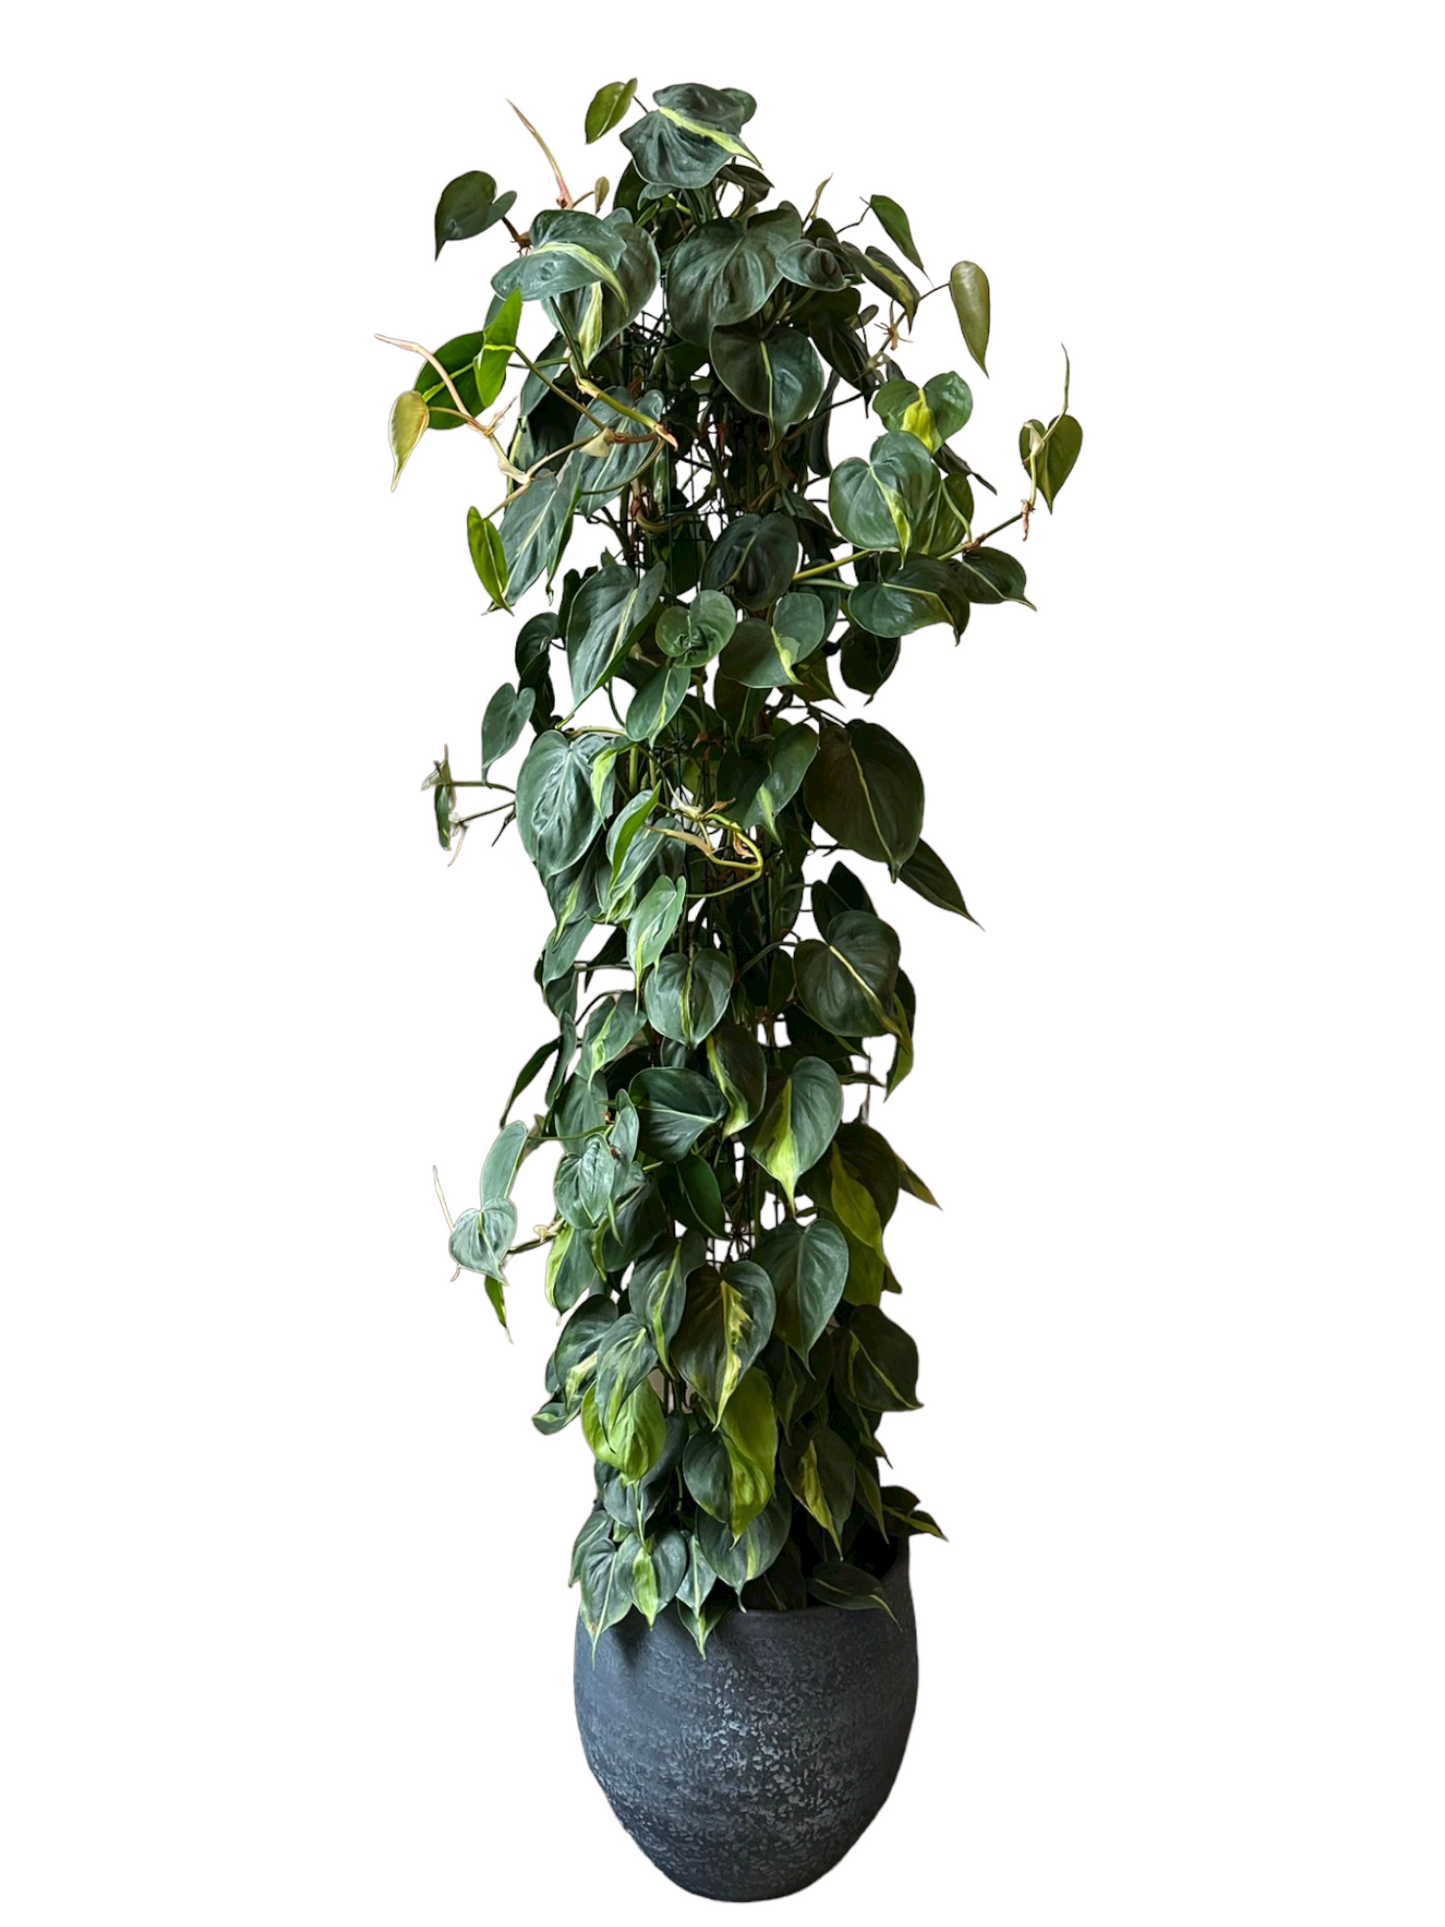 Philodendron scandens brasil